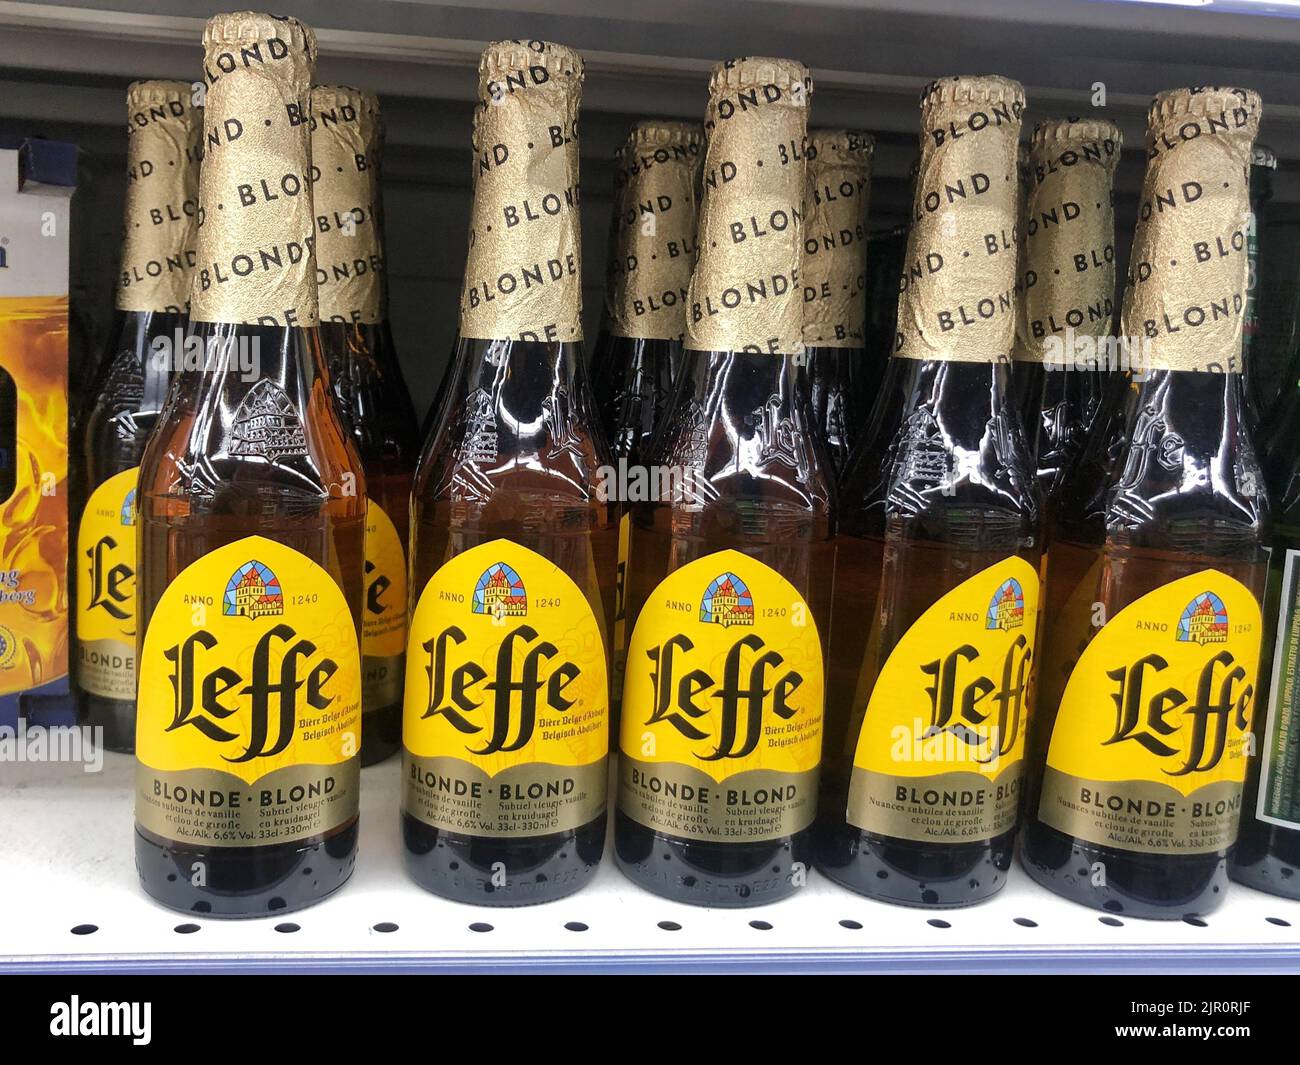 18.08.2022 Ukraine, Kharkiv, shelf with beer in glass bottles in a supermarket. Belgian high quality beer Stock Photo